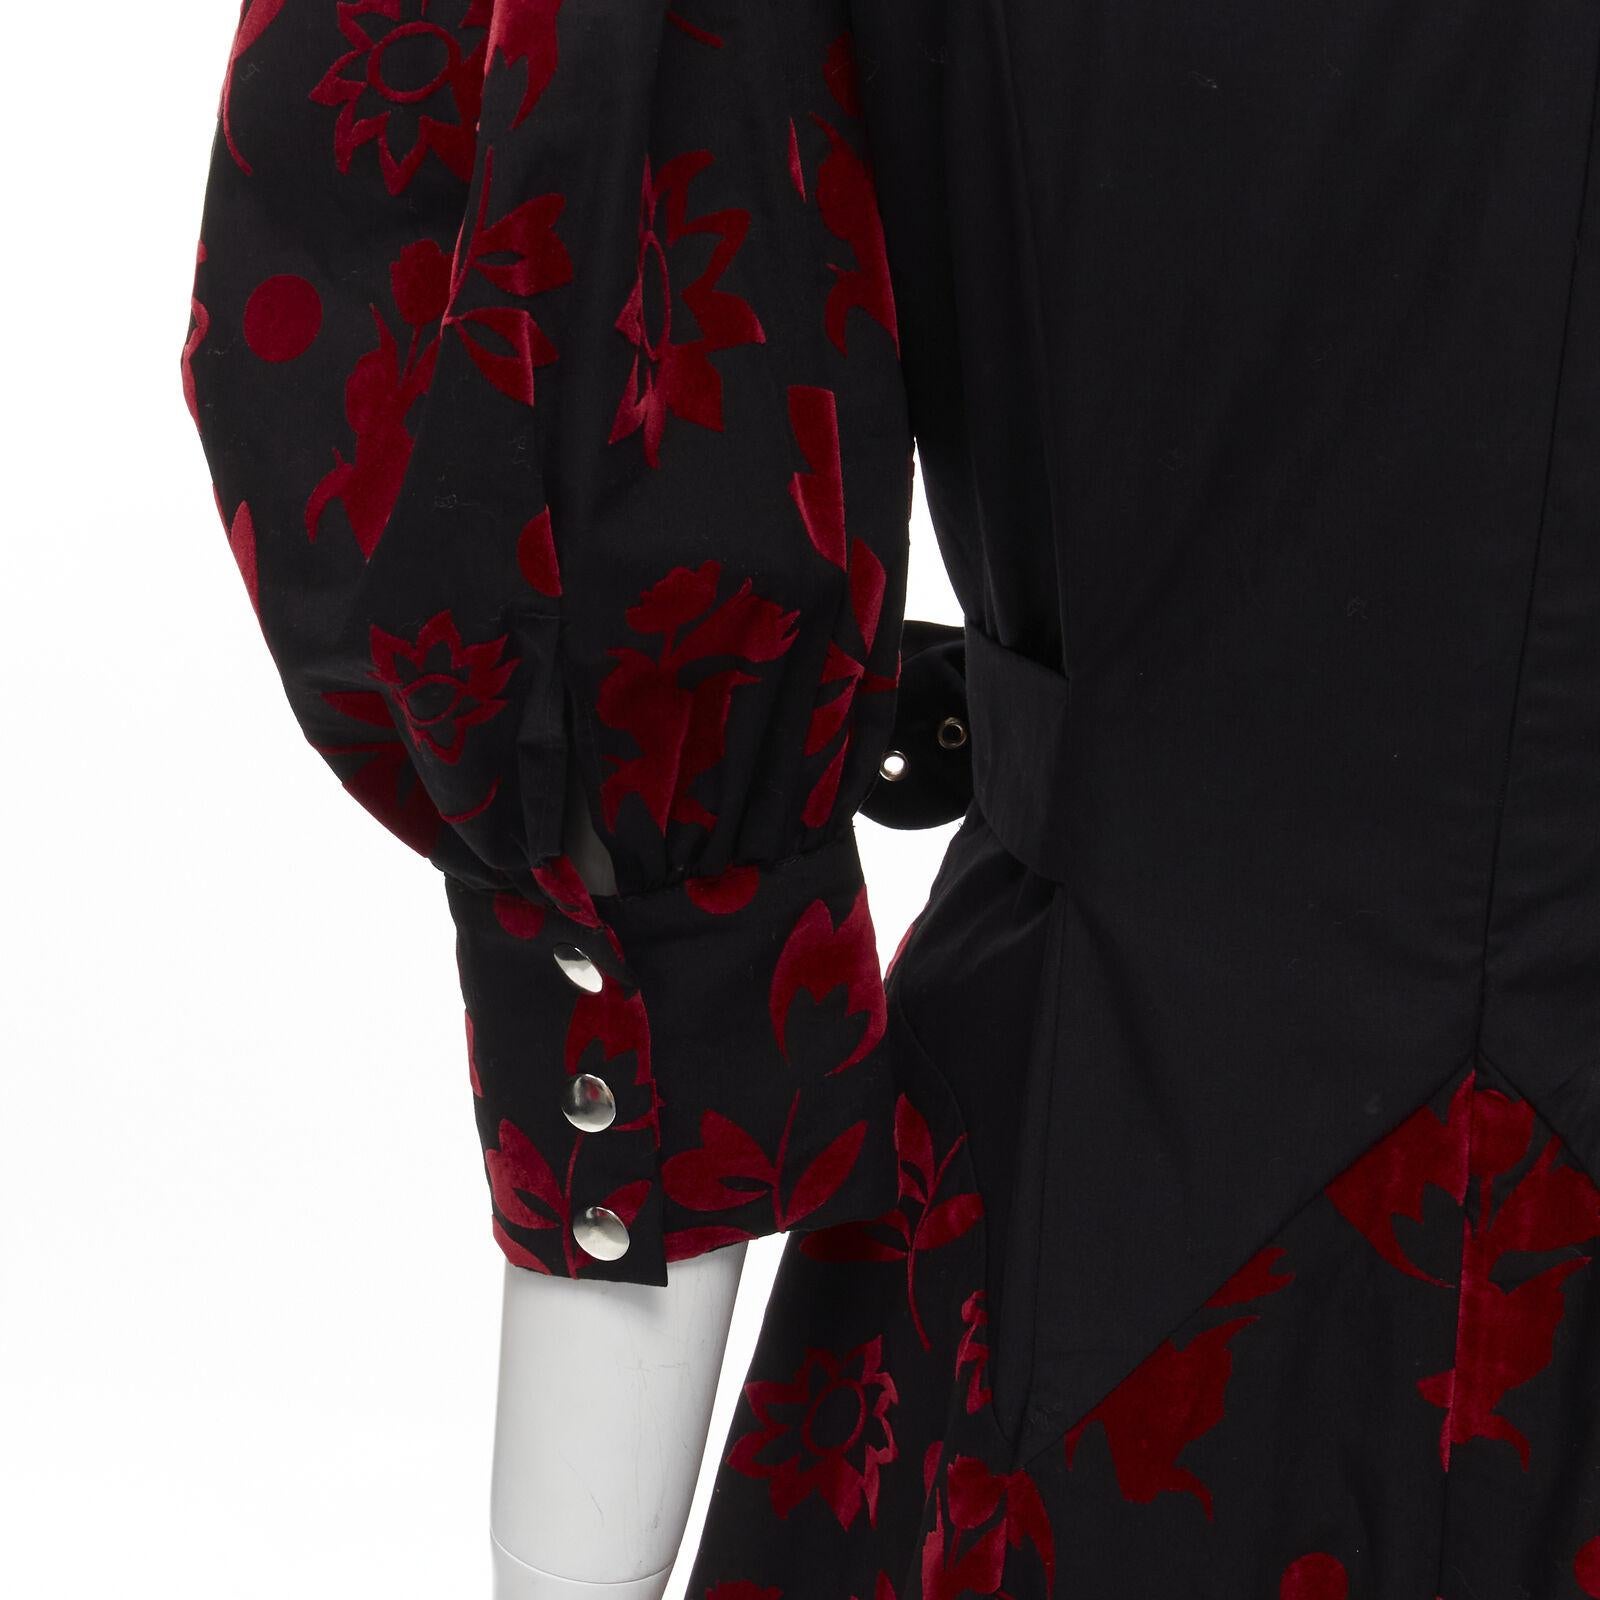 CHOPOVA LOWENA red velvet floral butterfly hook black corset Victorian dress S For Sale 4